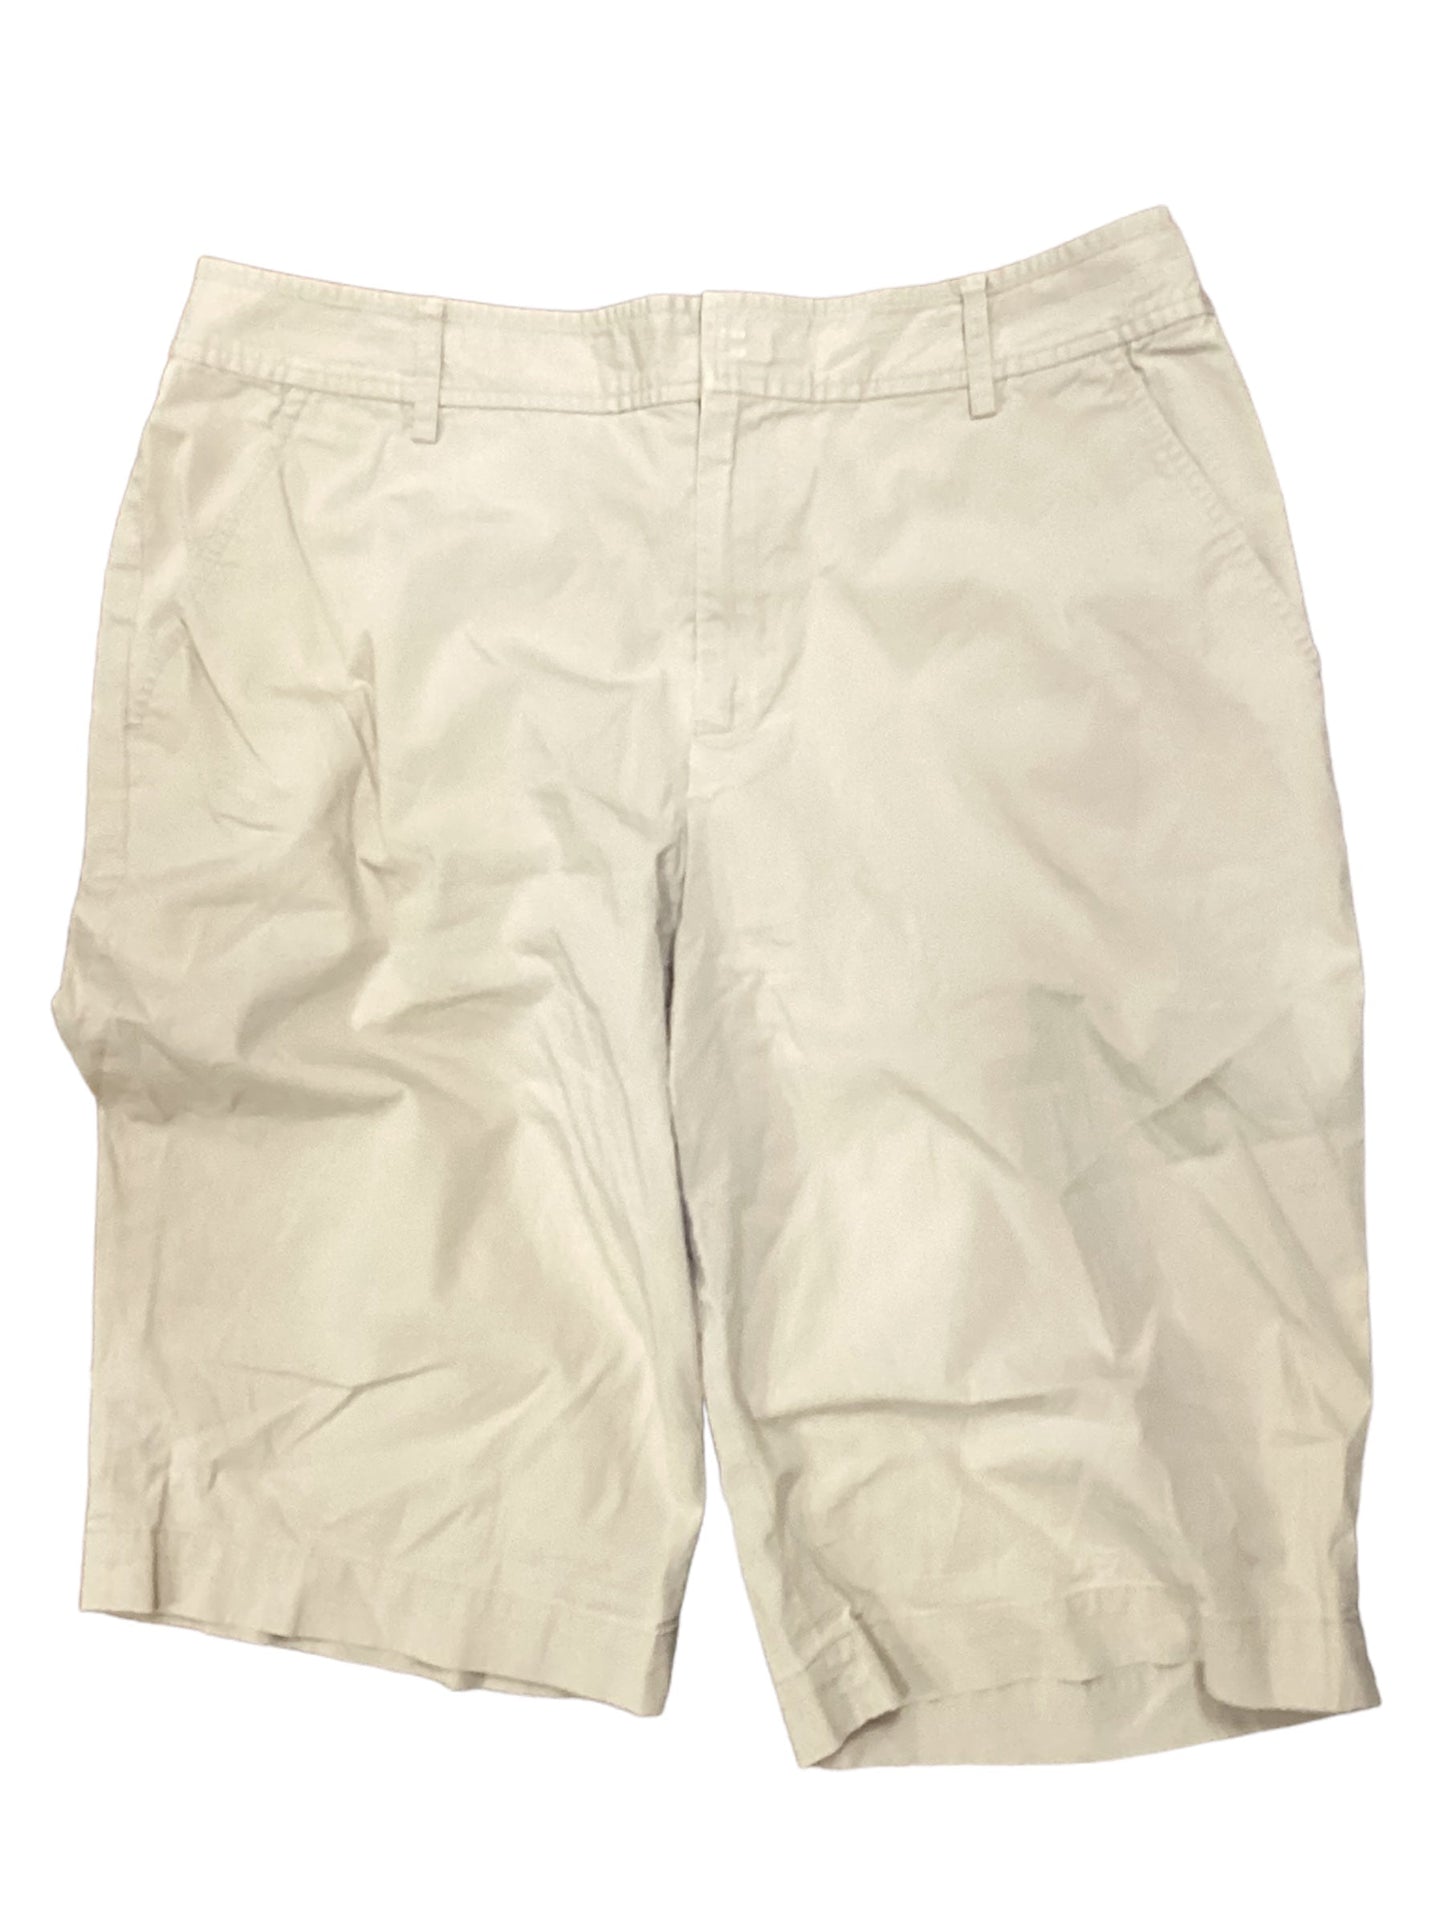 Shorts By Ralph Lauren  Size: 8